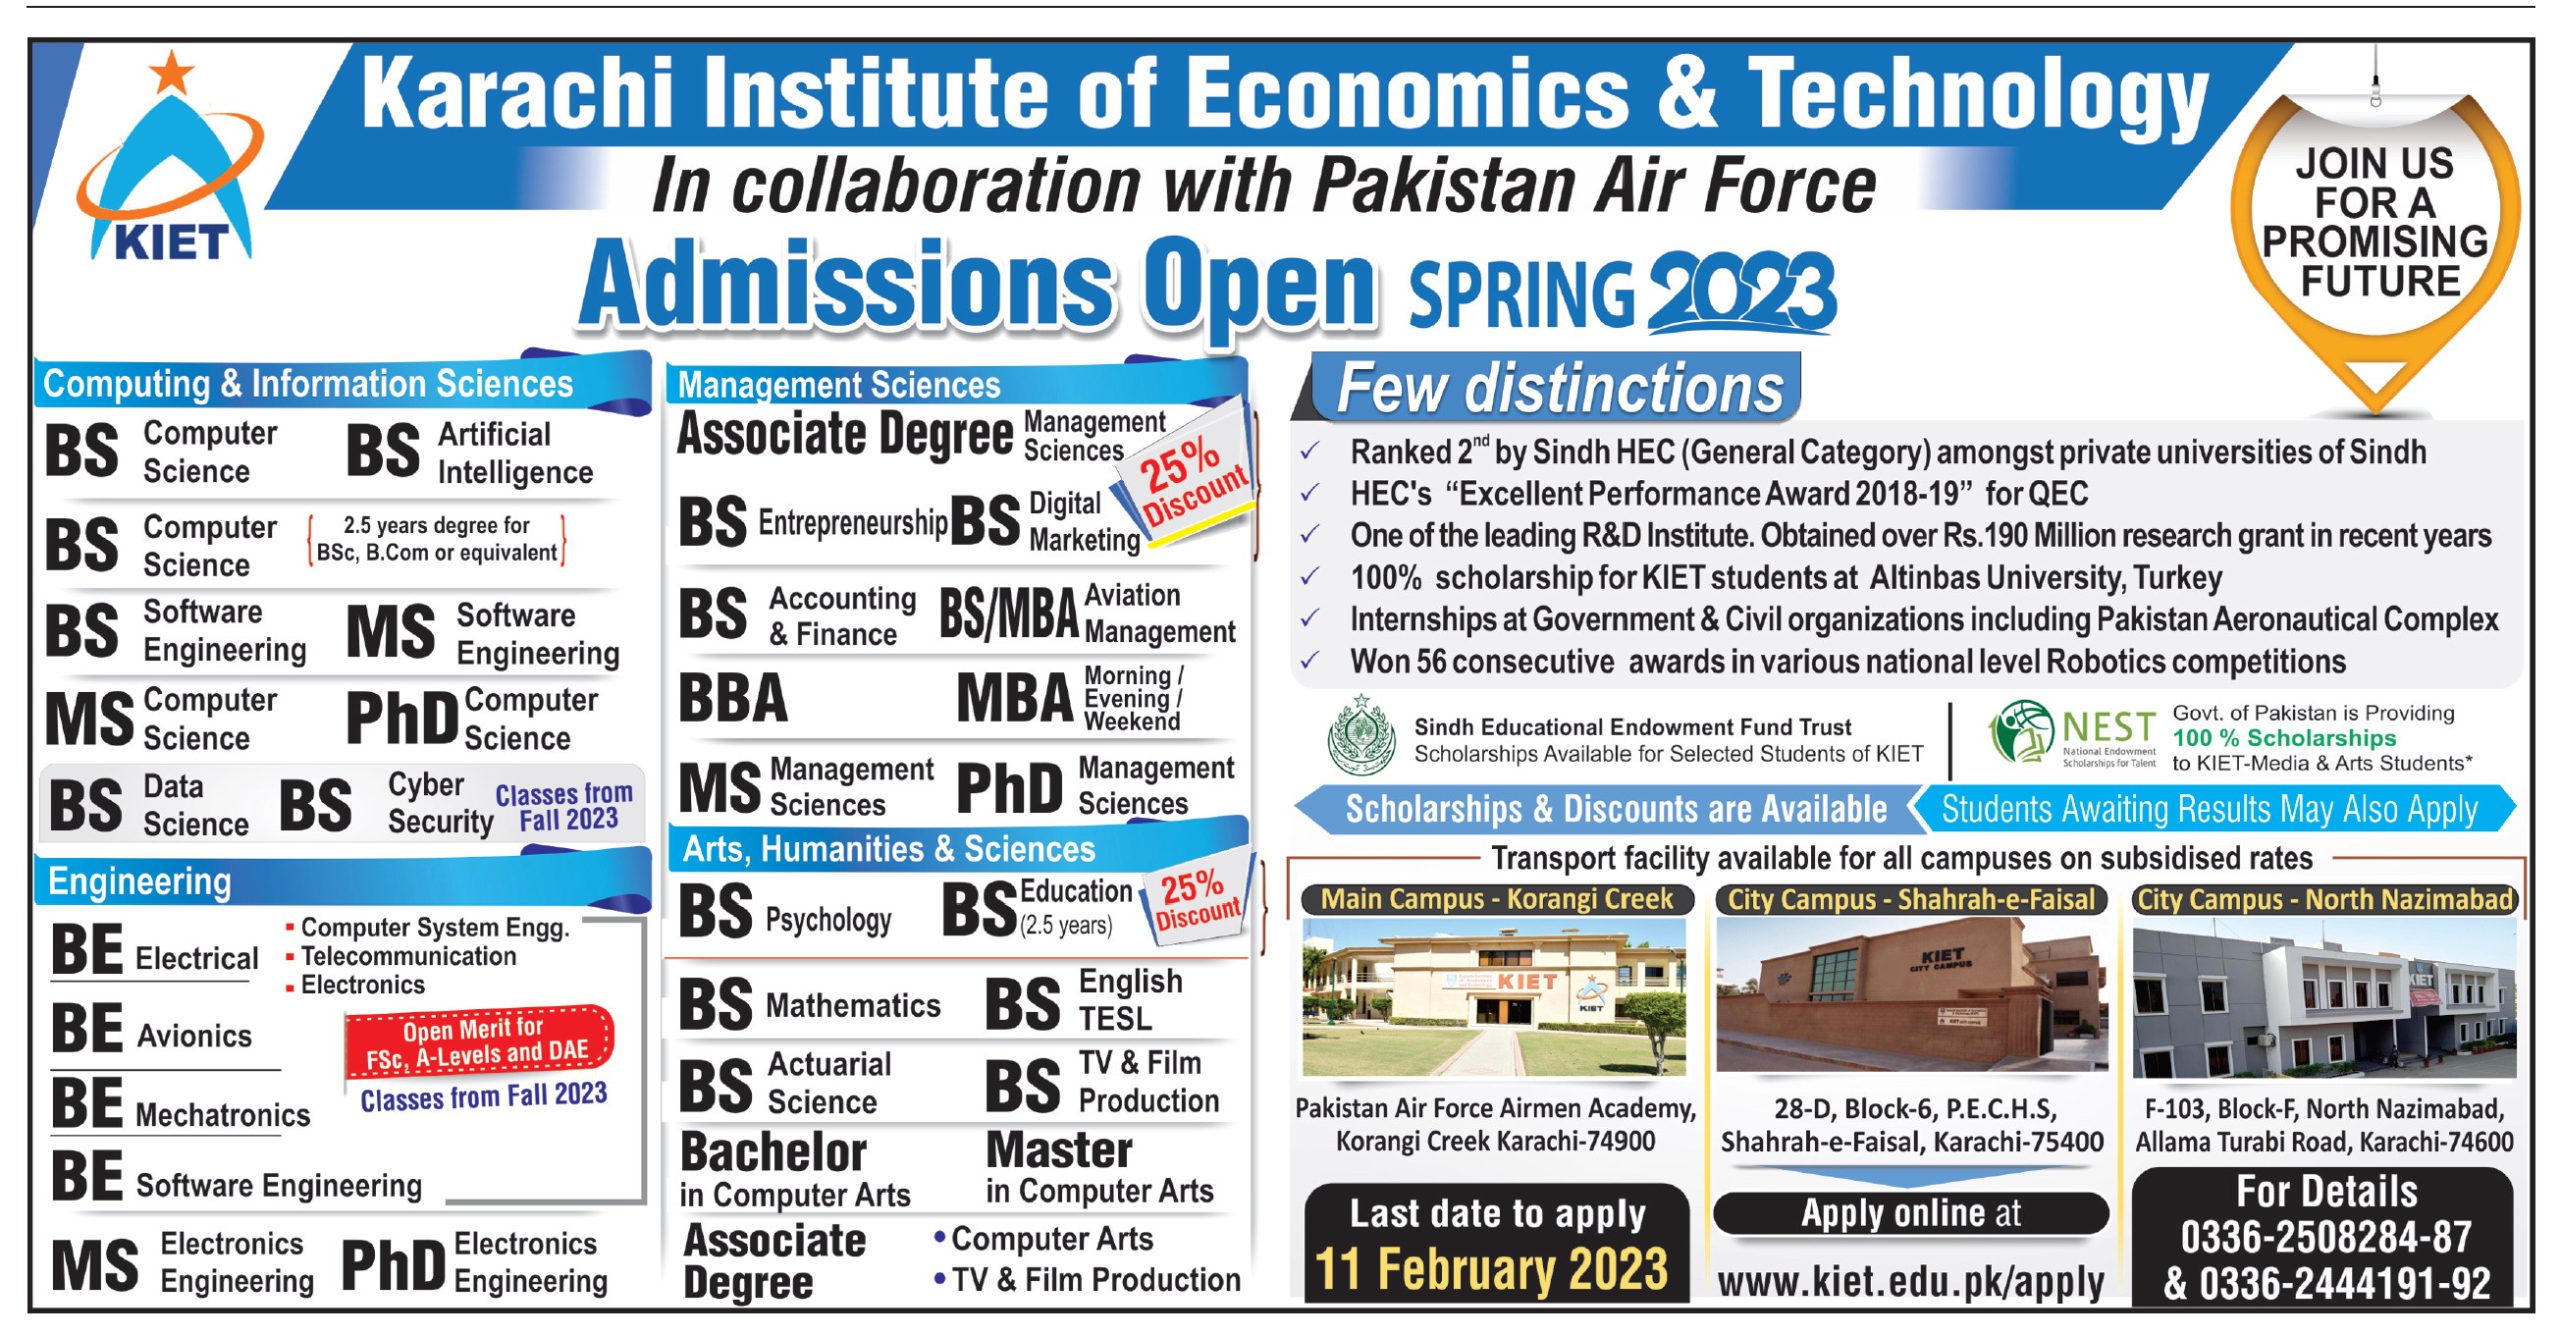 paf-kiet-admissions-2023-karachi-institute-of-economics-technology